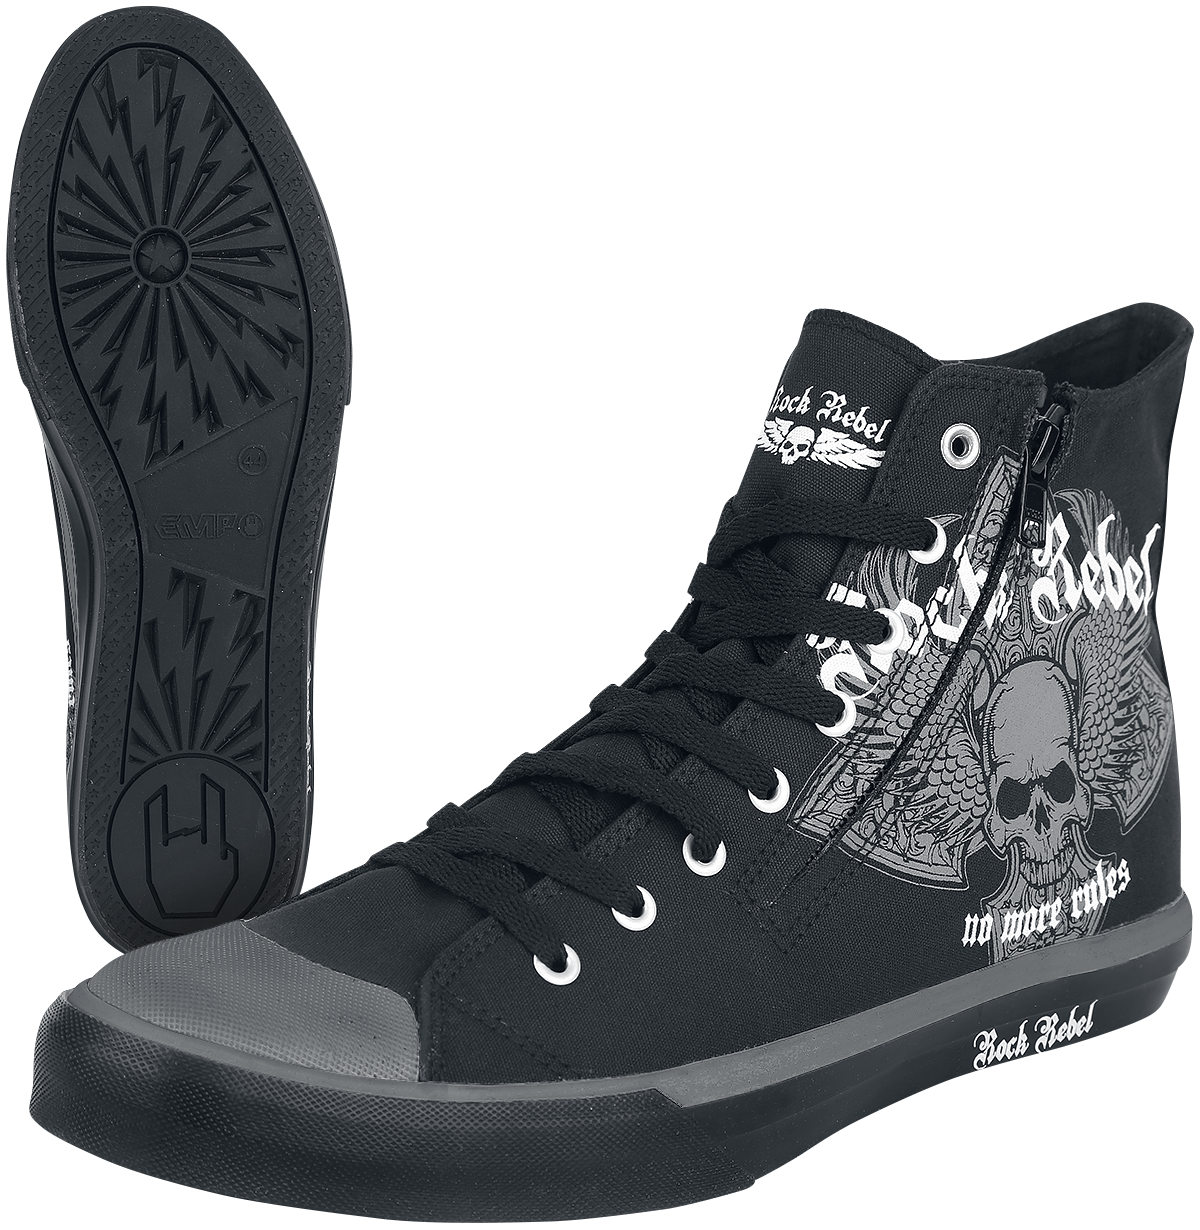 Rock Rebel by EMP - Walk The Line - Sneaker high - schwarz - EMP Exklusiv!